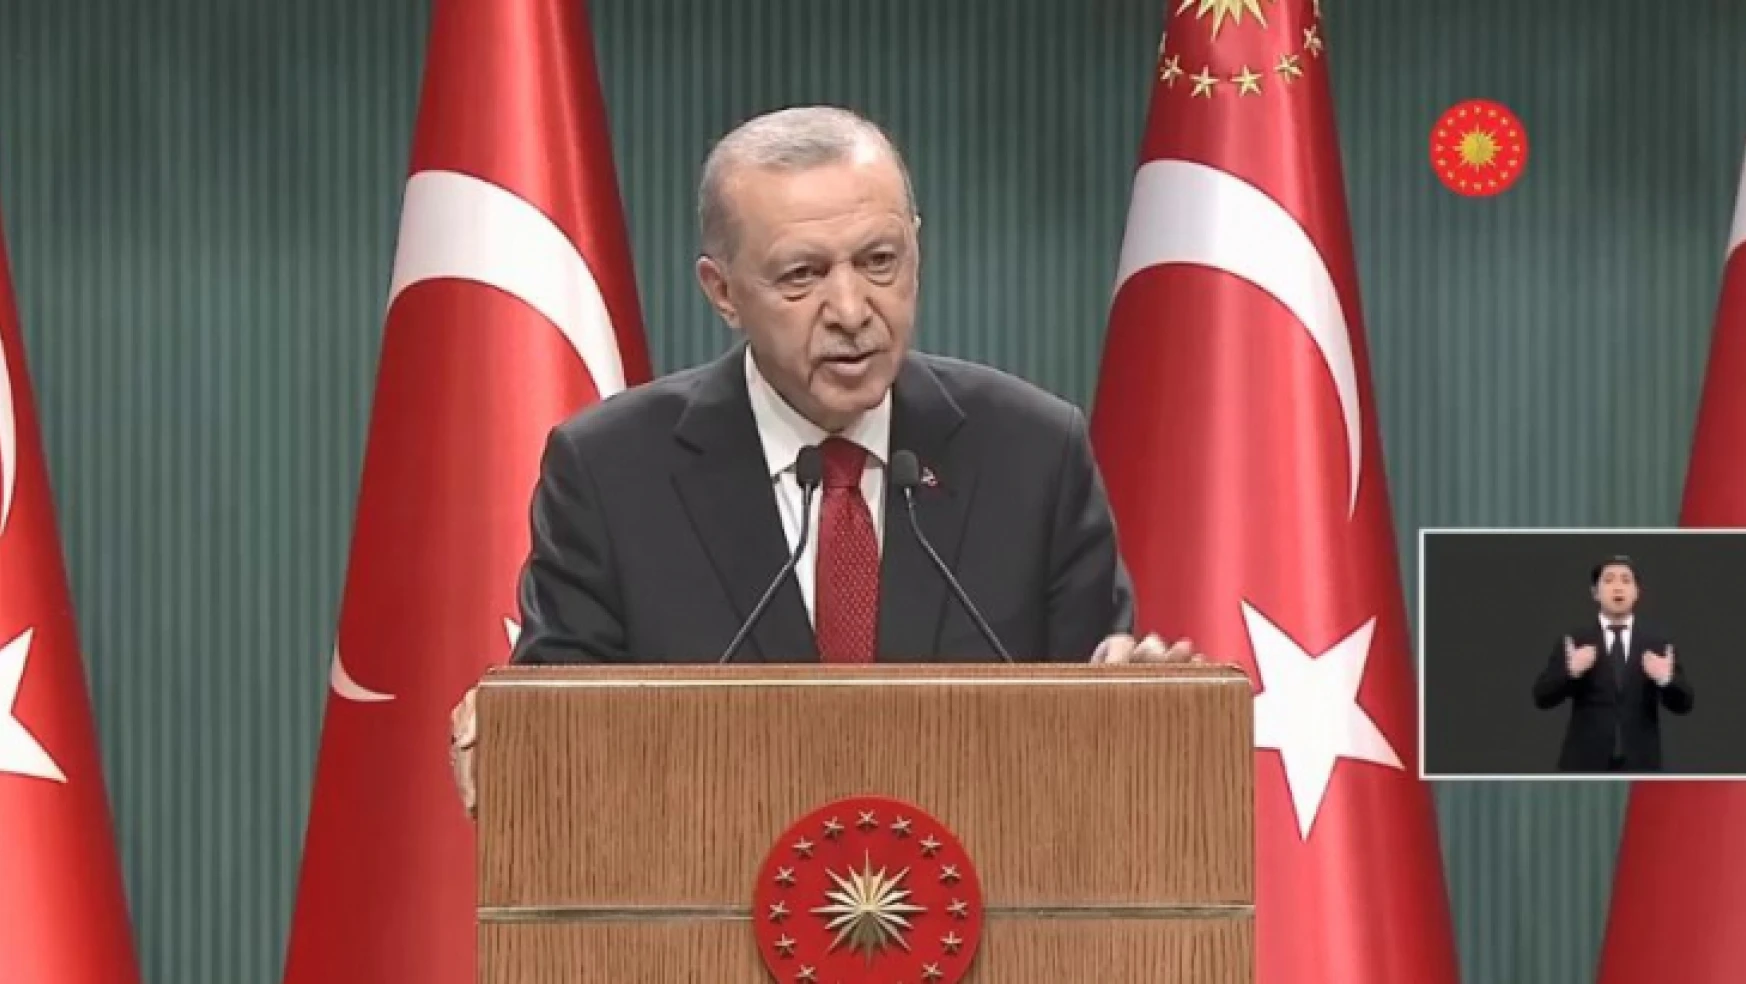 Erdoğan: Kurban Bayram tatili 9 gün